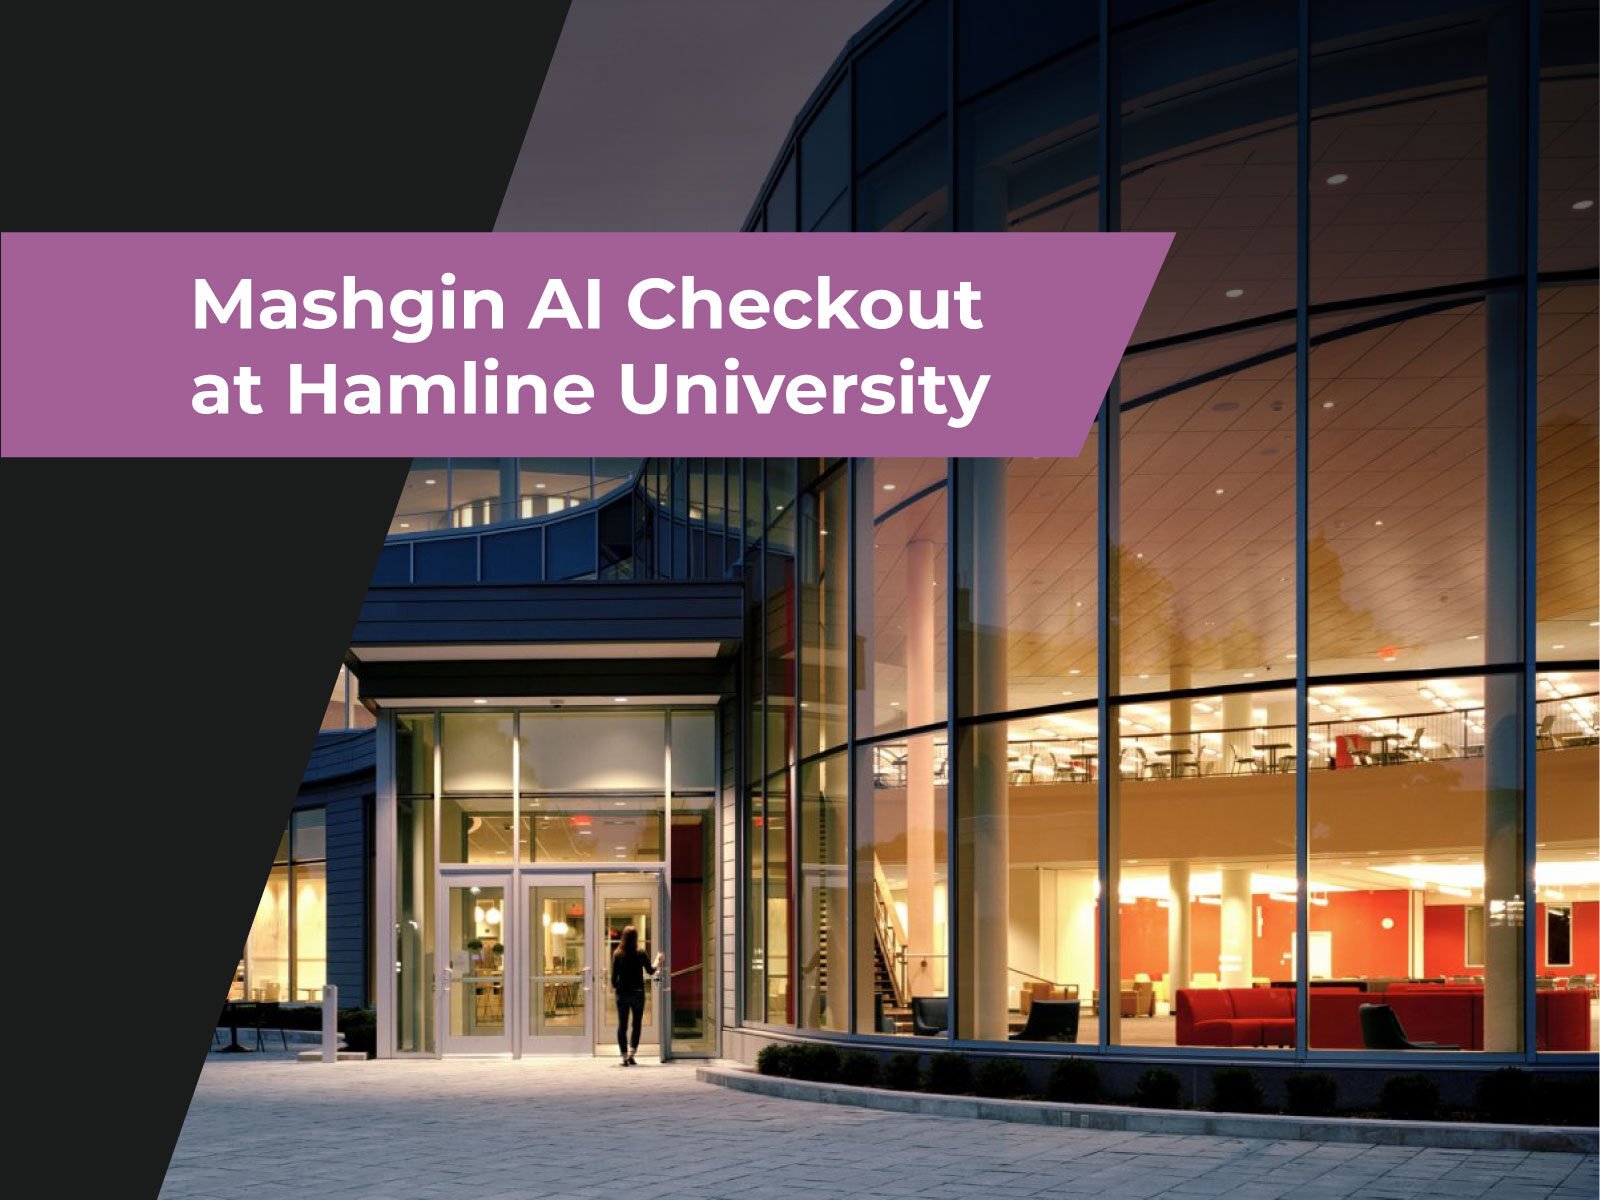 Mashgin AI Checkout at Hamline University